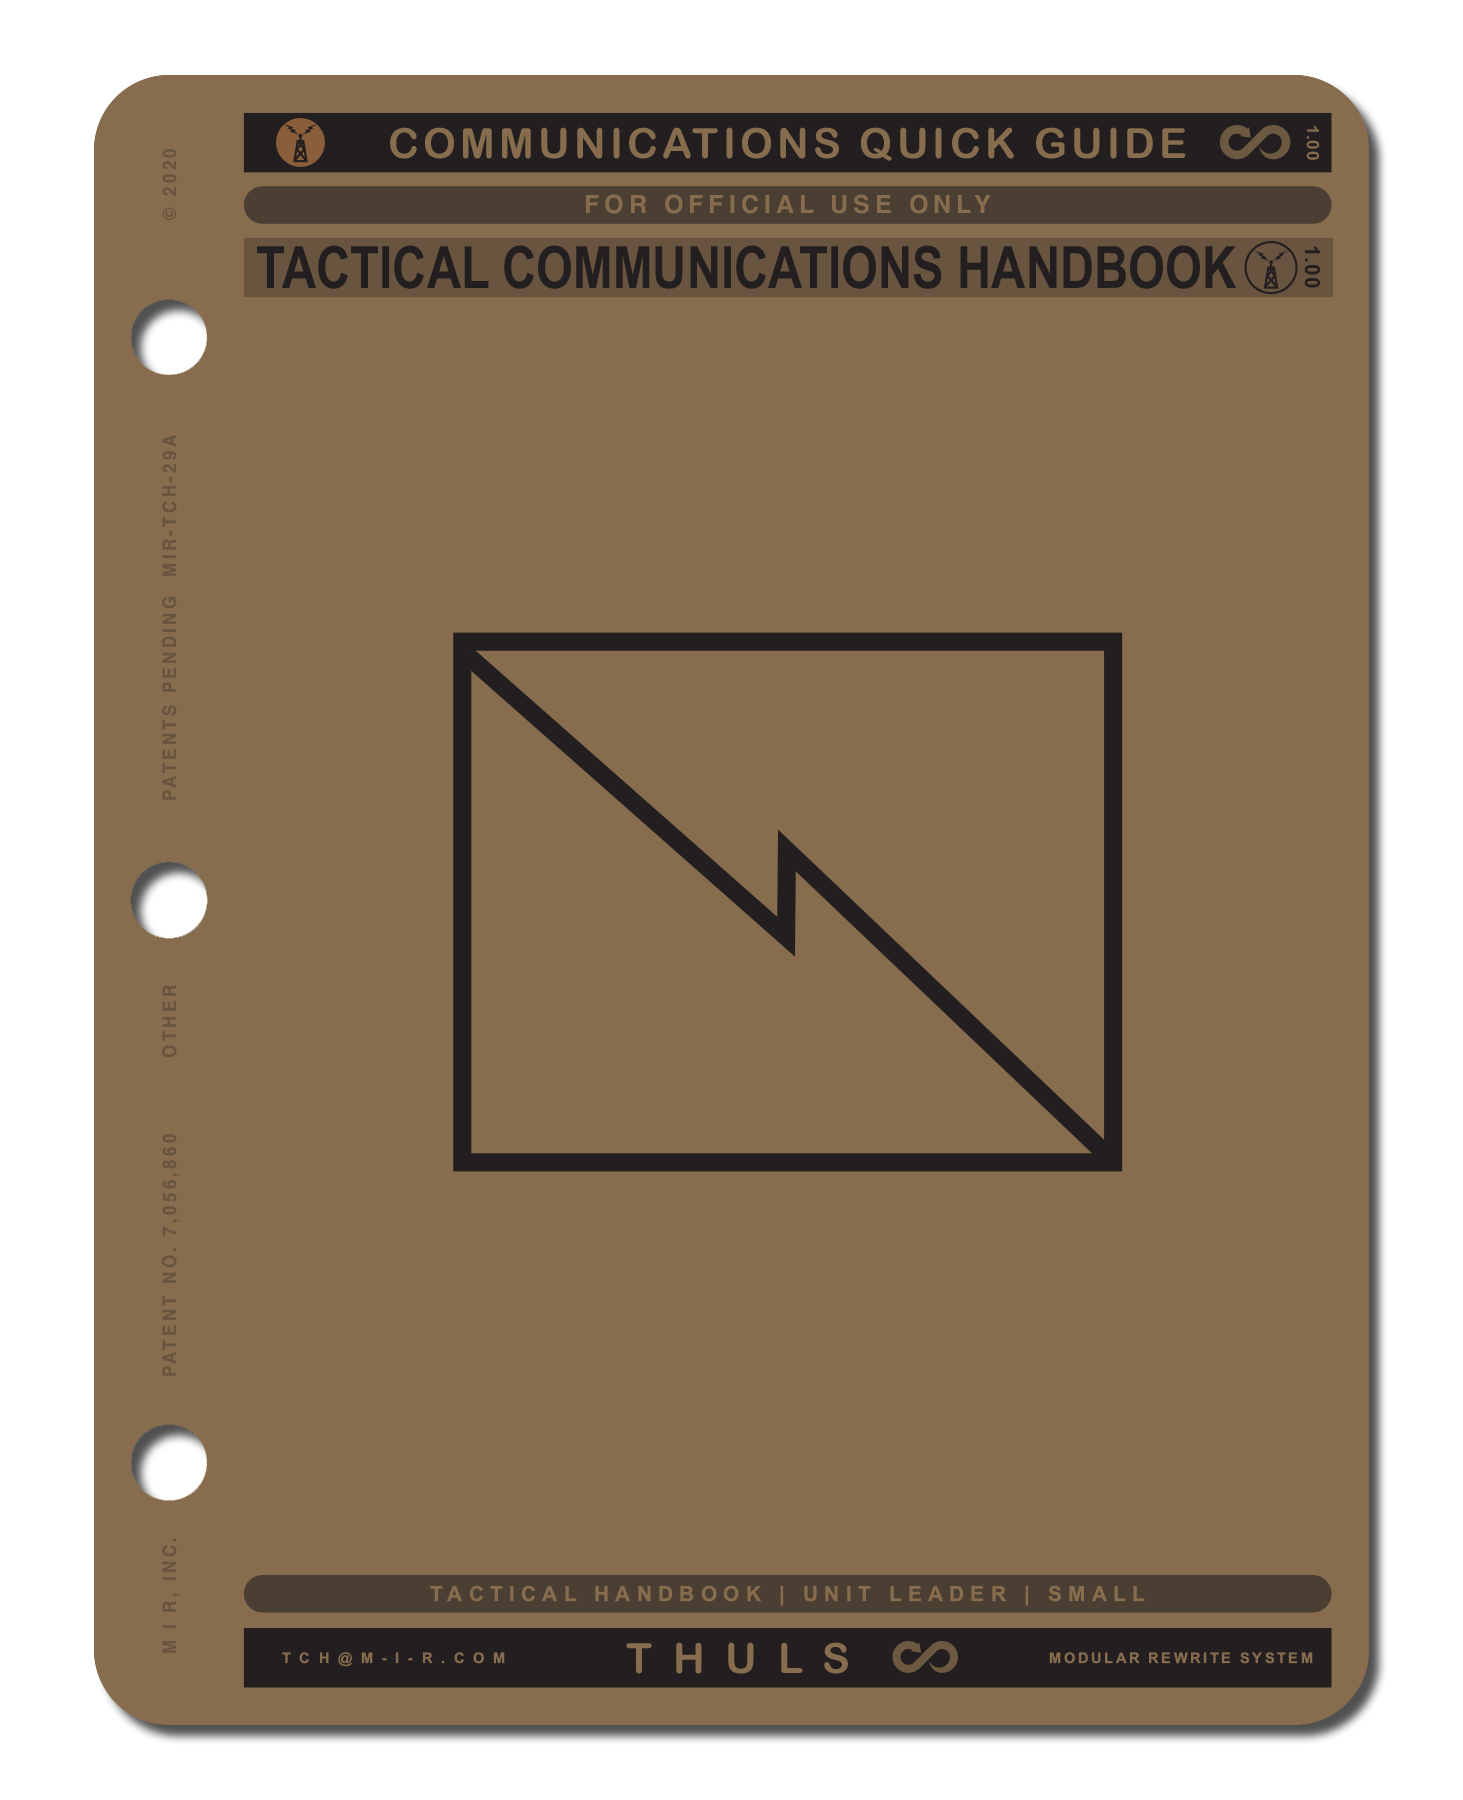 TACTICAL COMMUNICATIONS HANDBOOK